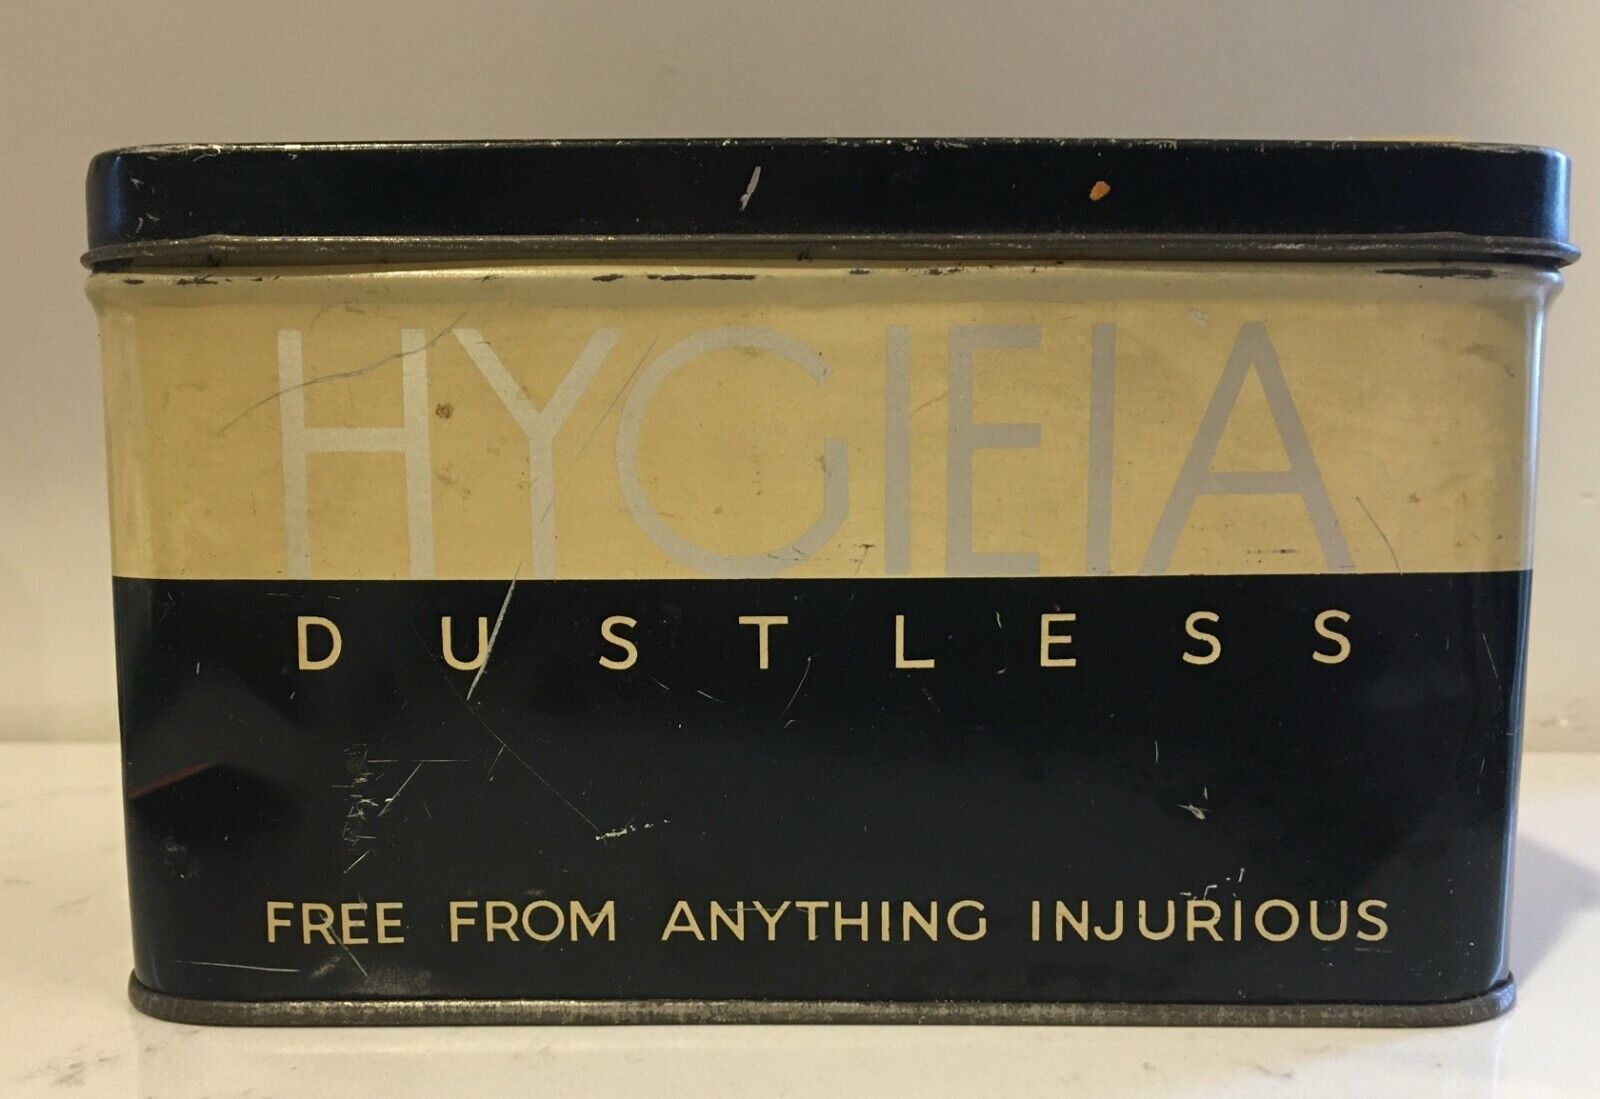 HYGIEIA Dustless Chalk Vintage Tin The American Crayon Company Sandusky Ohio